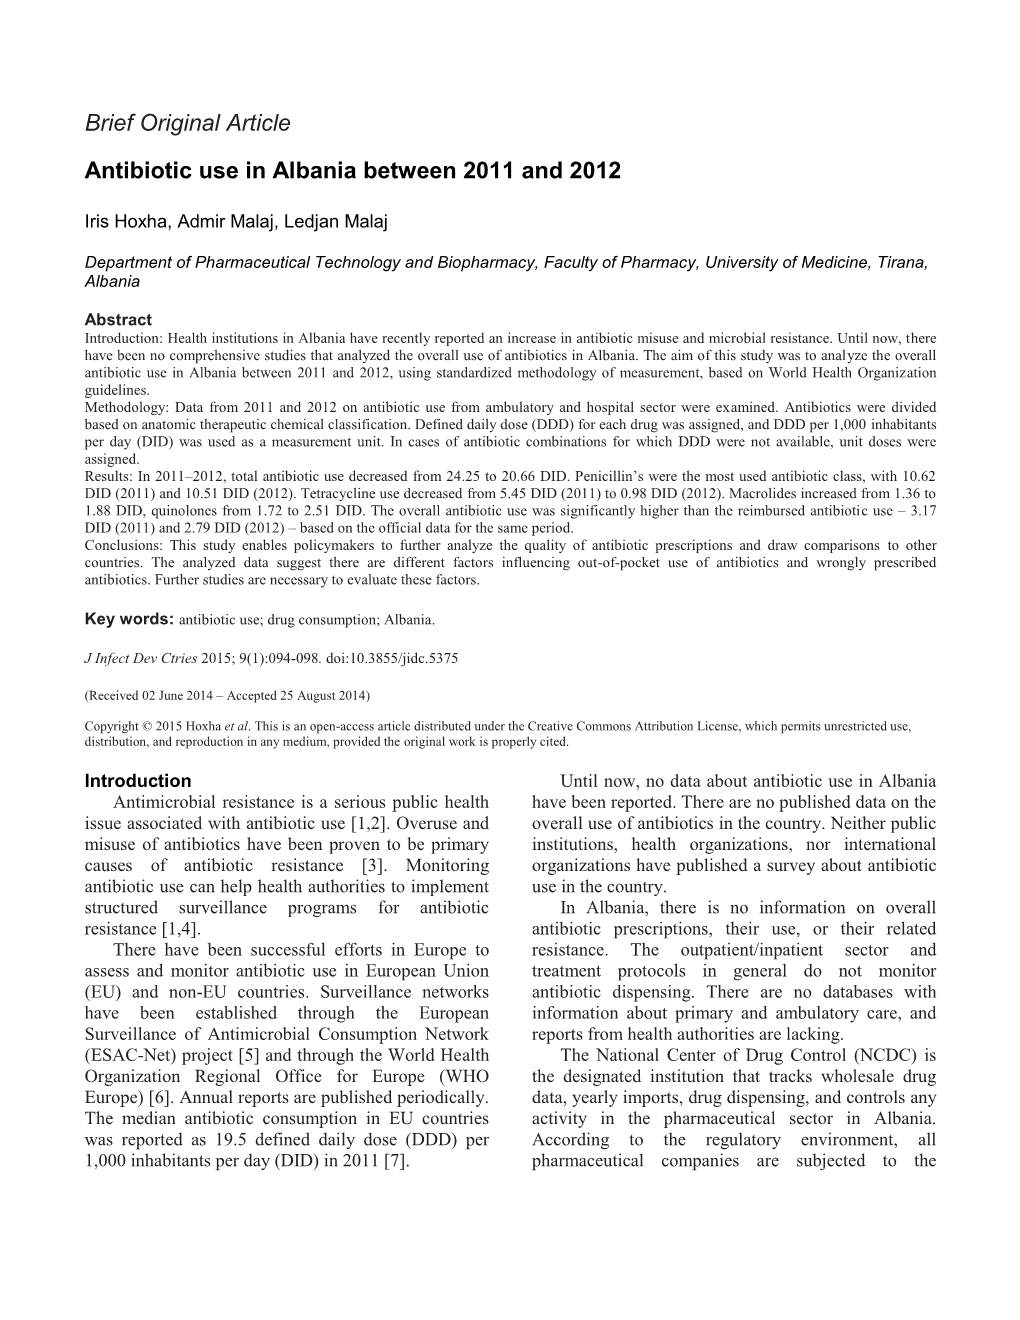 Brief Original Article Antibiotic Use in Albania Between 2011 and 2012